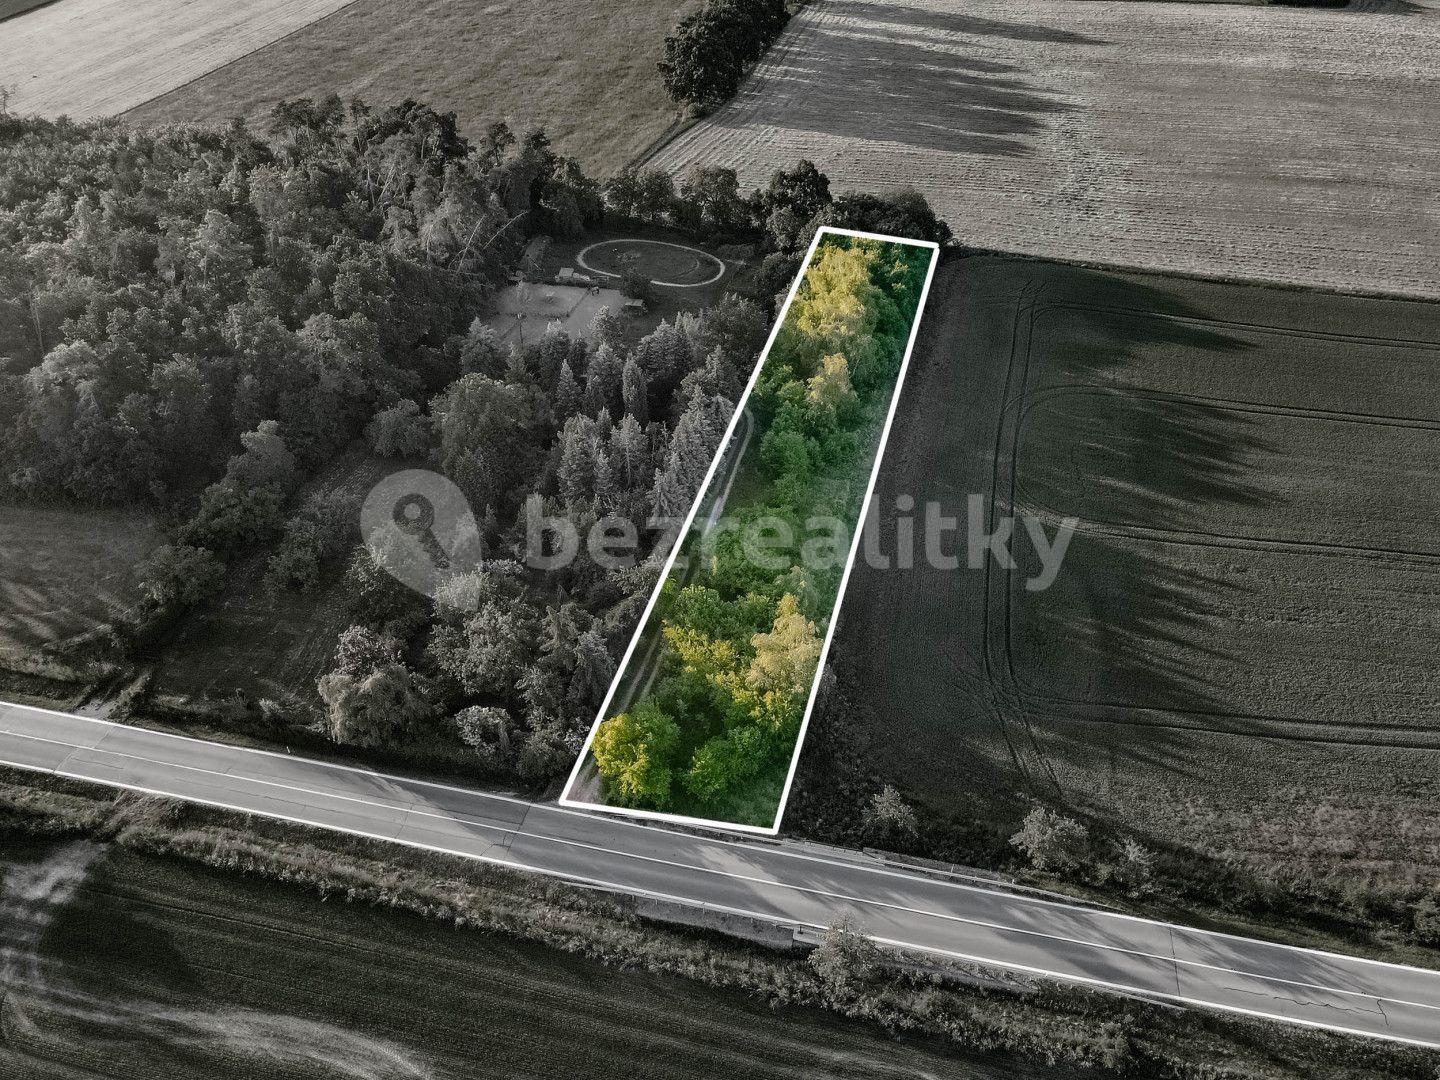 plot for sale, 3,761 m², Sezemice, Pardubický Region